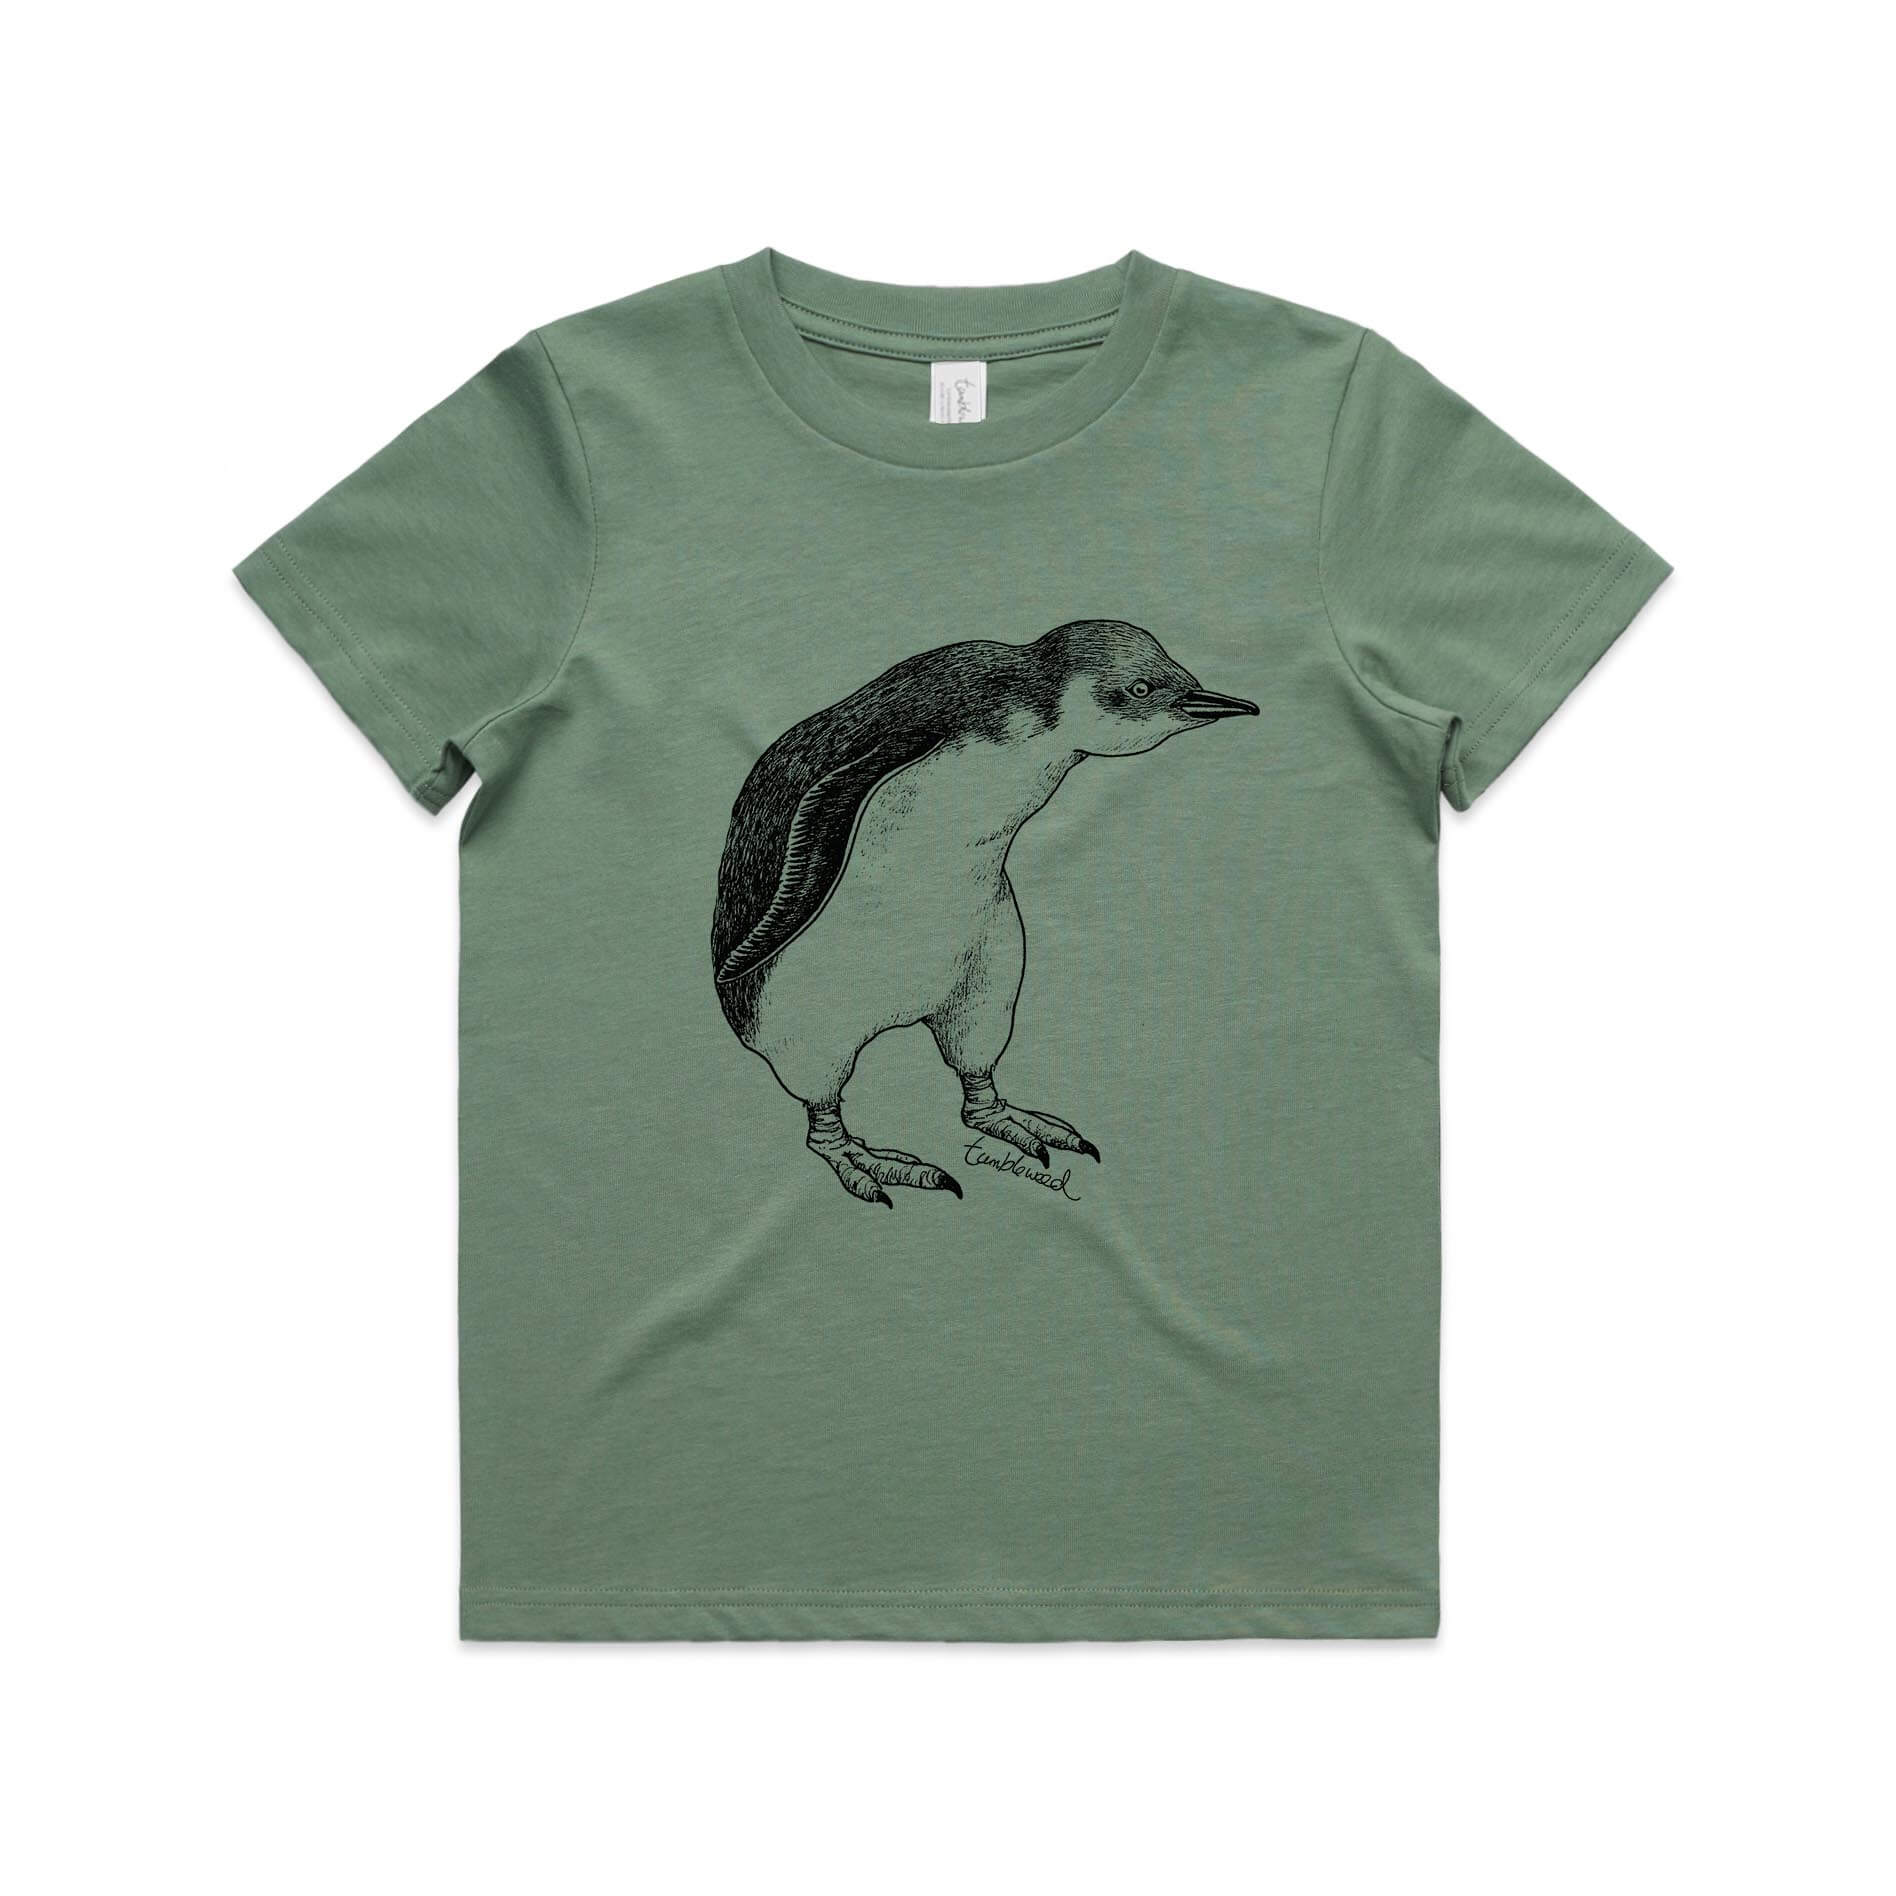 Sage, cotton kids' t-shirt with screen printed Kids little penguin design.